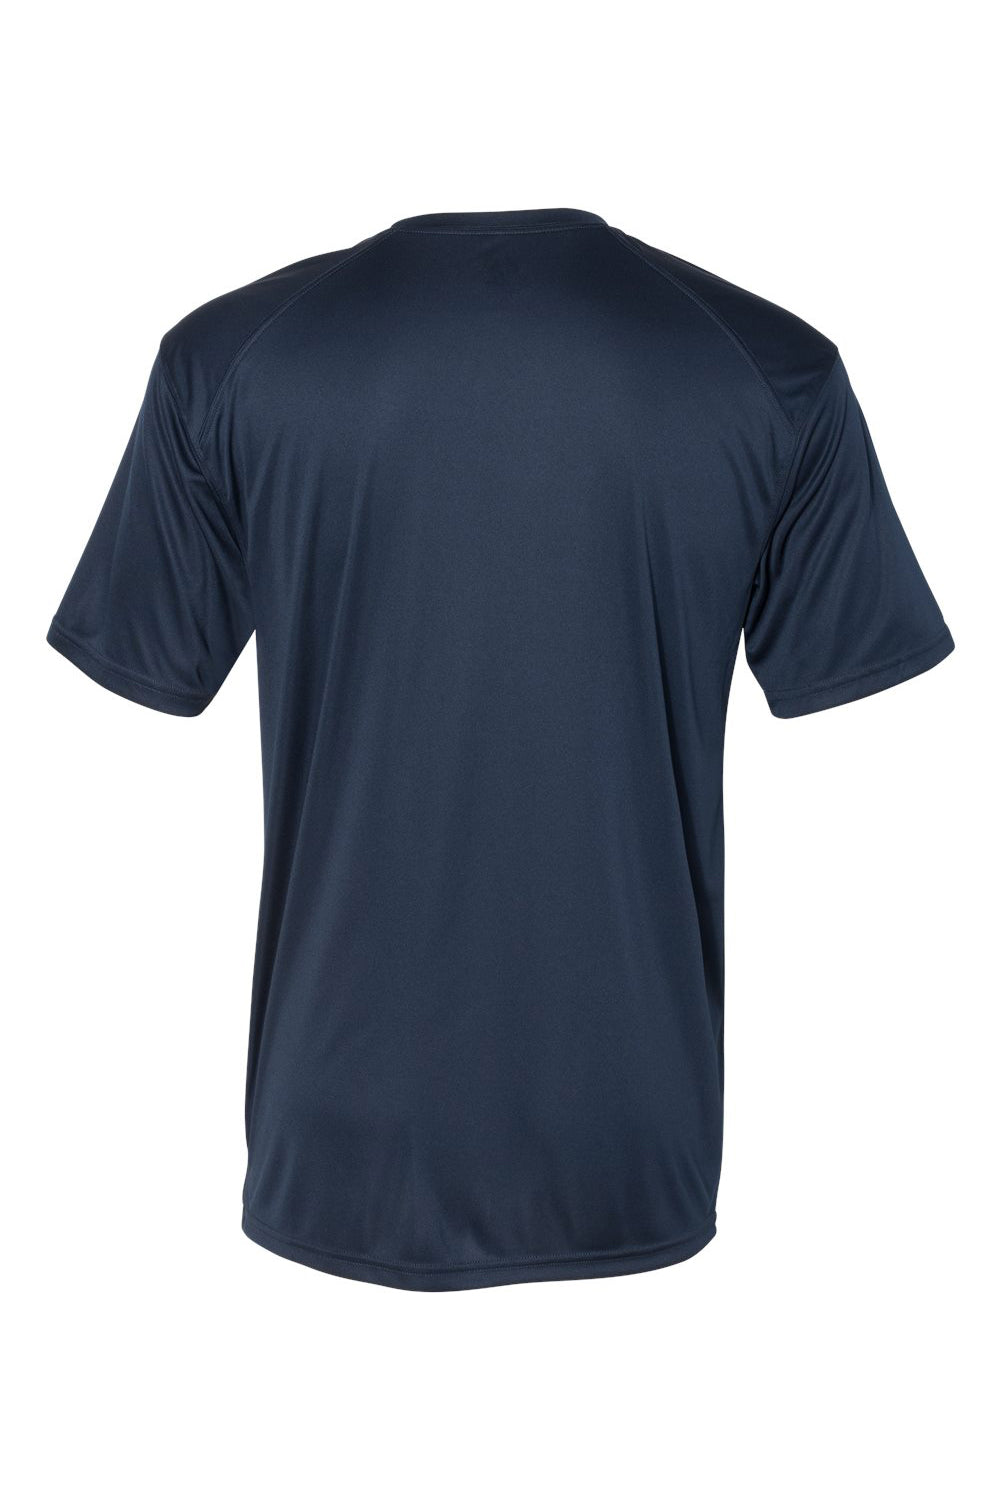 Badger 4020 Mens Ultimate SoftLock Moisture Wicking Short Sleeve Crewneck T-Shirt Navy Blue Flat Back